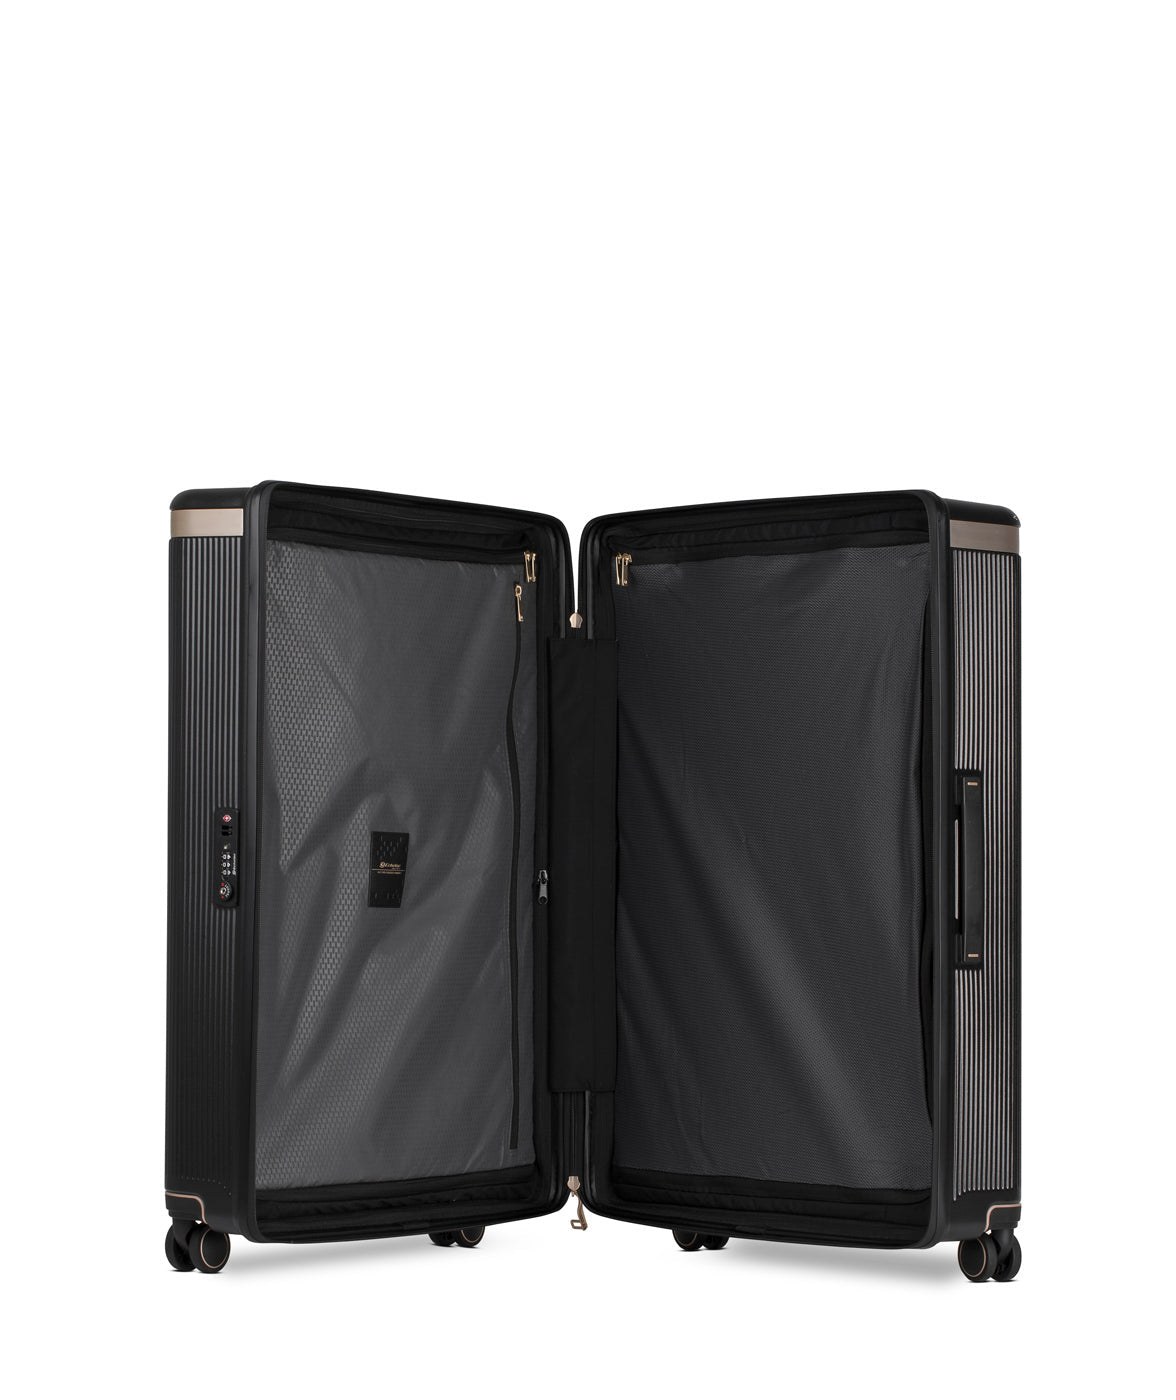 Echolac Dynasty Suitcase, Large 76 cm, Dunkelgrau